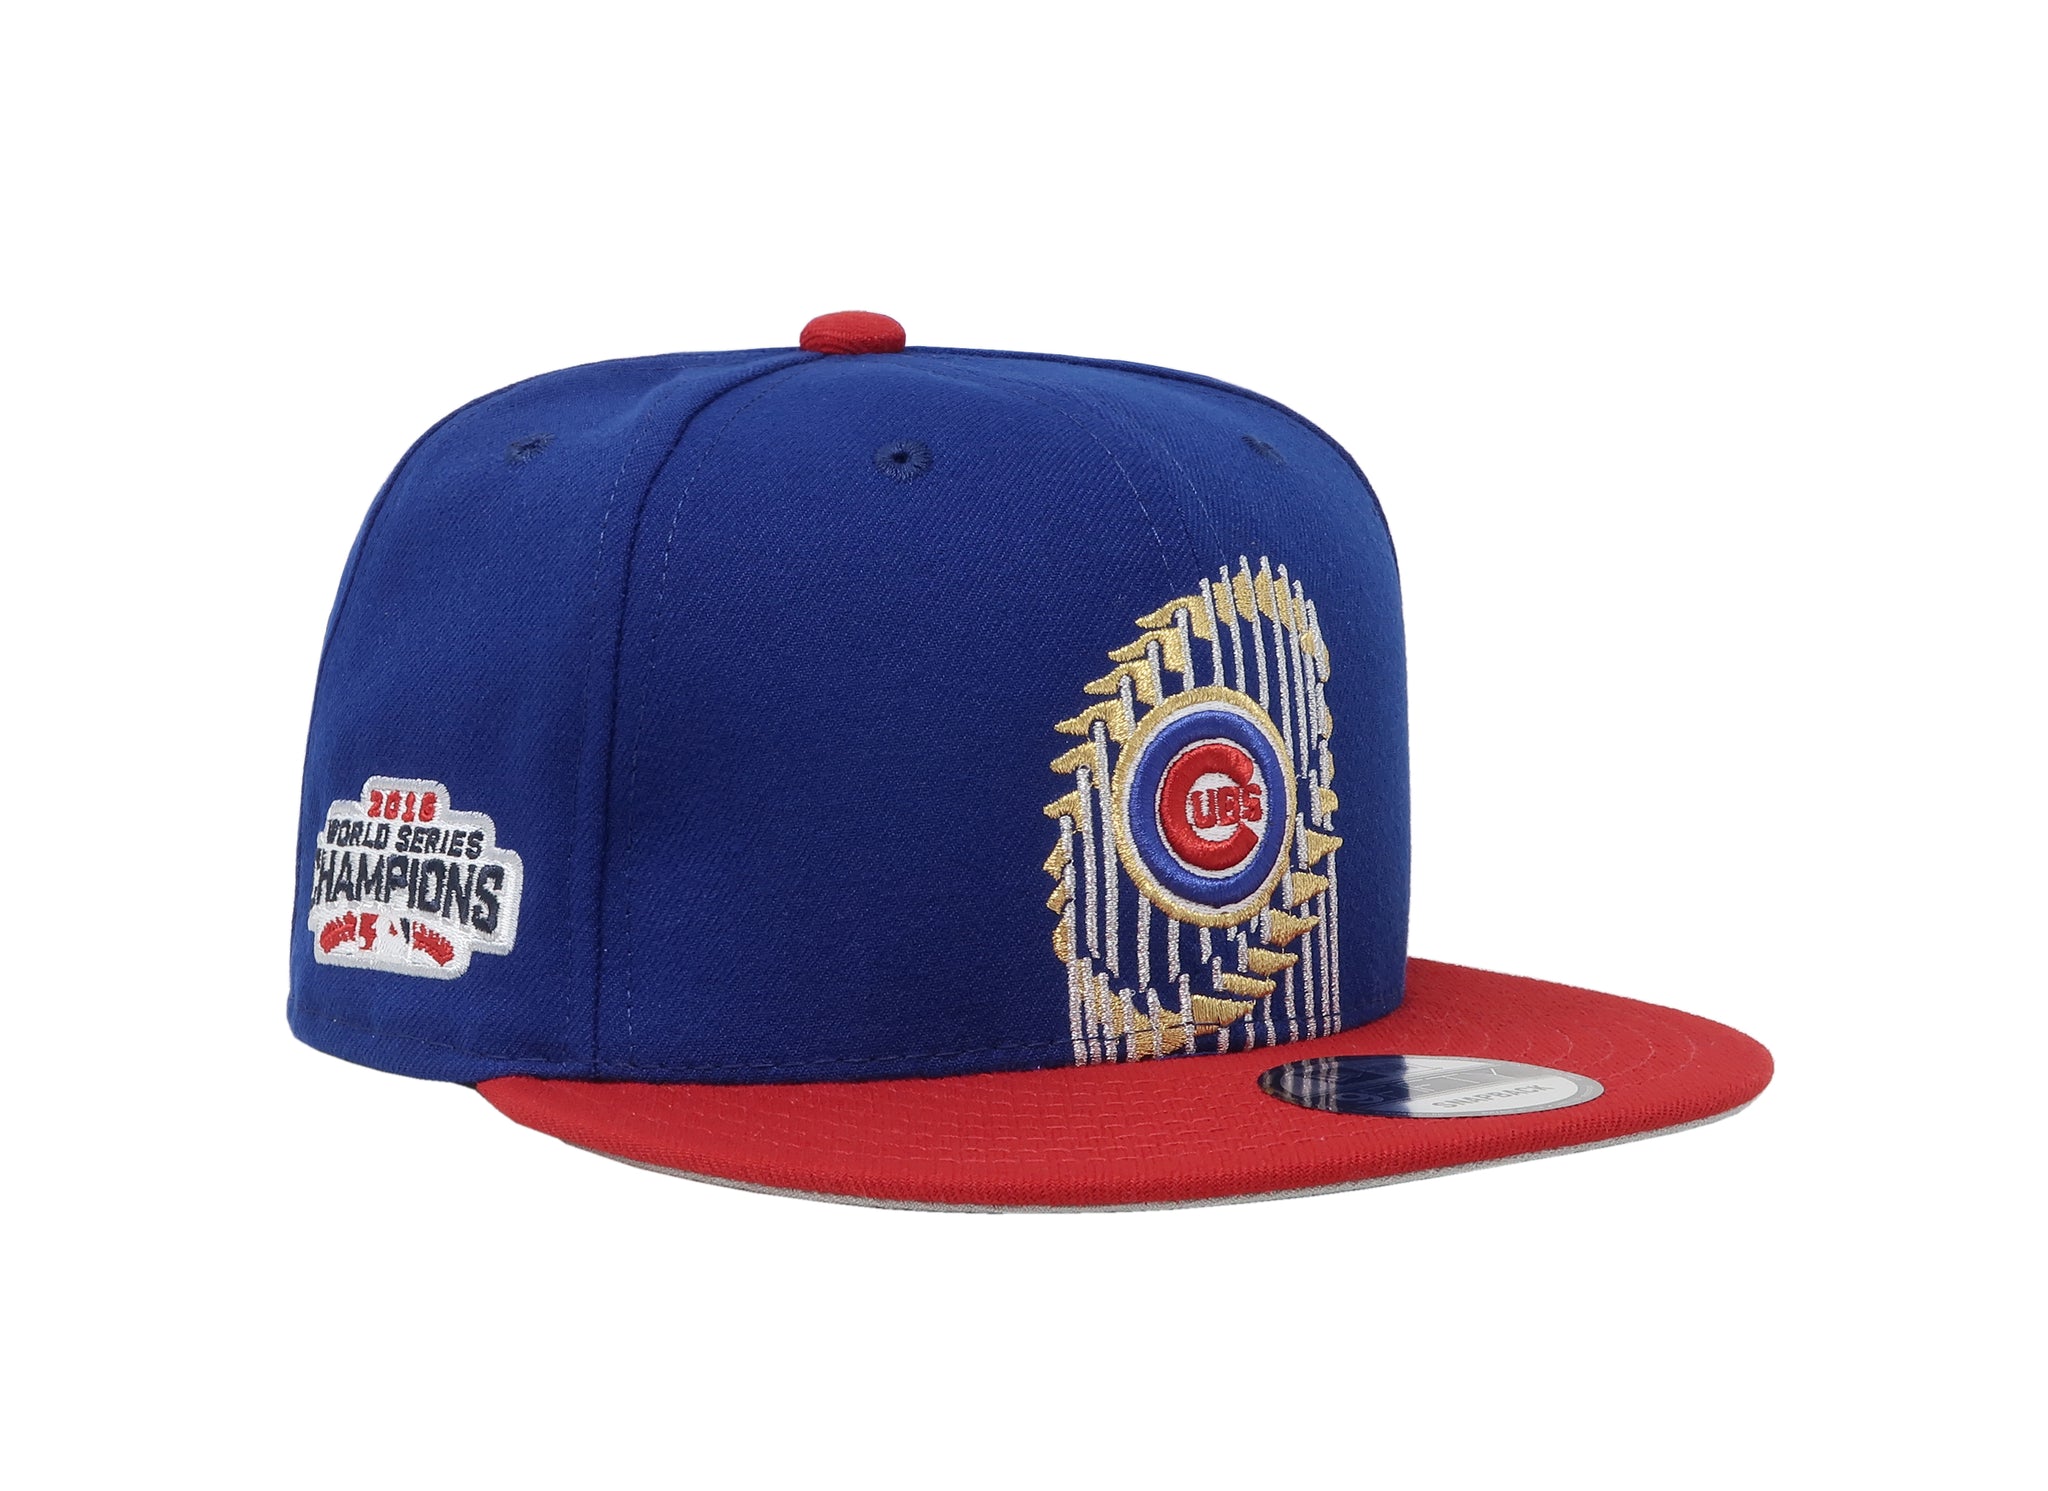 New Era 9Fifty MLB Chicago Cubs 2016 World Series Champions Snapback Cap